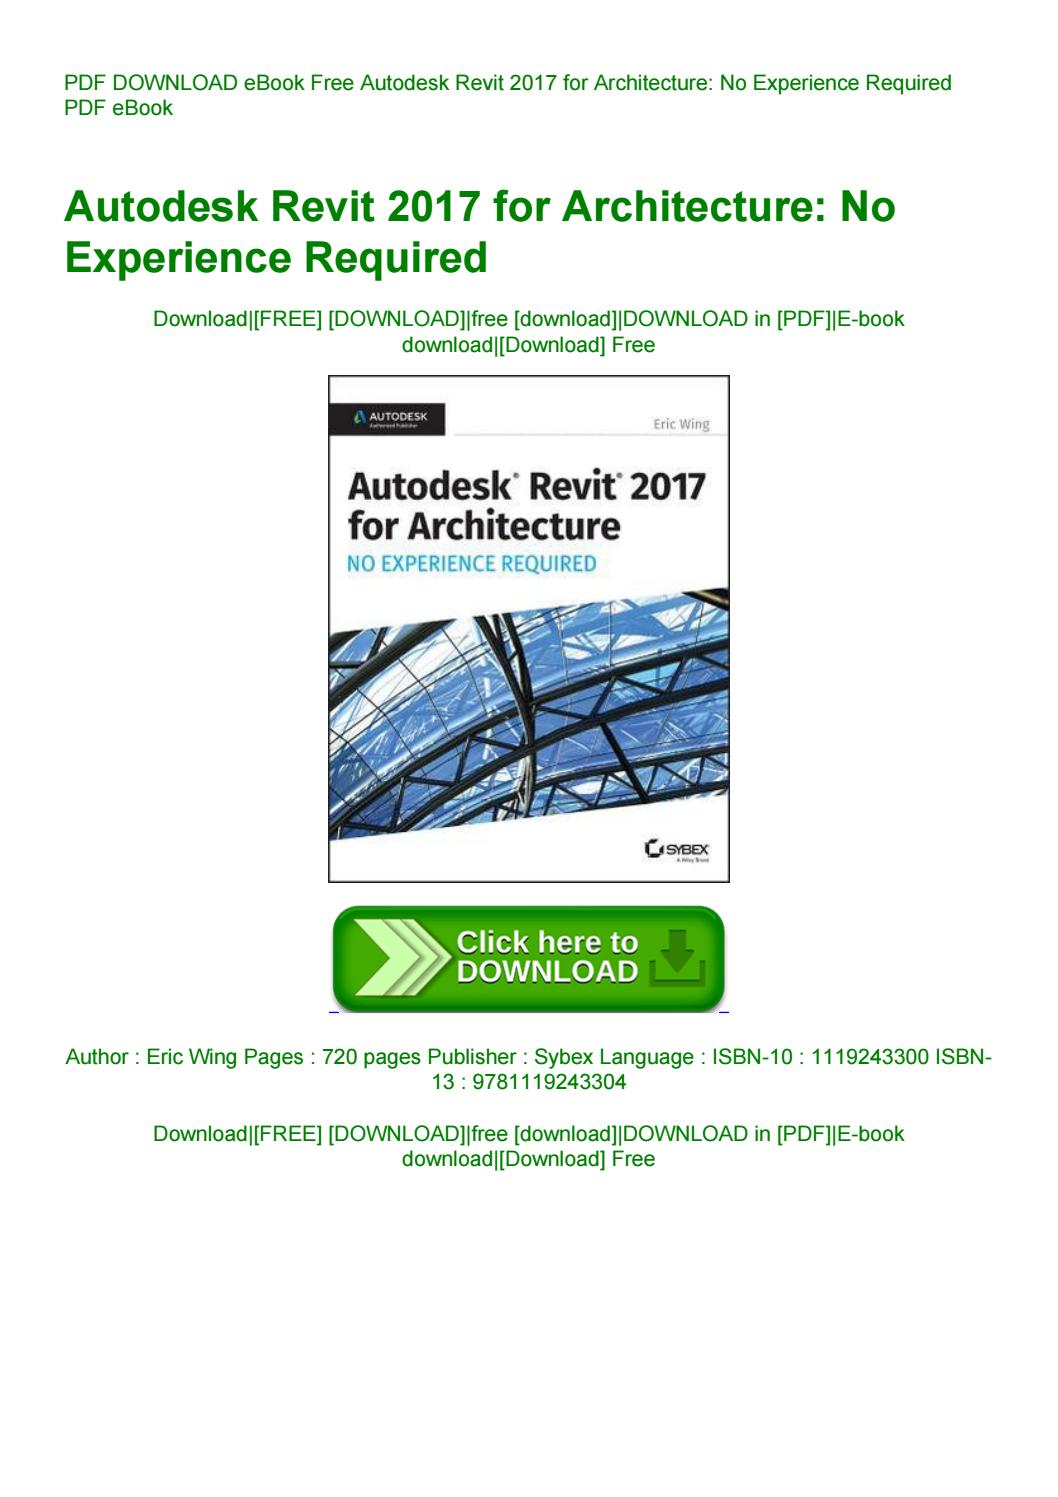 Autodesk Architecture Download